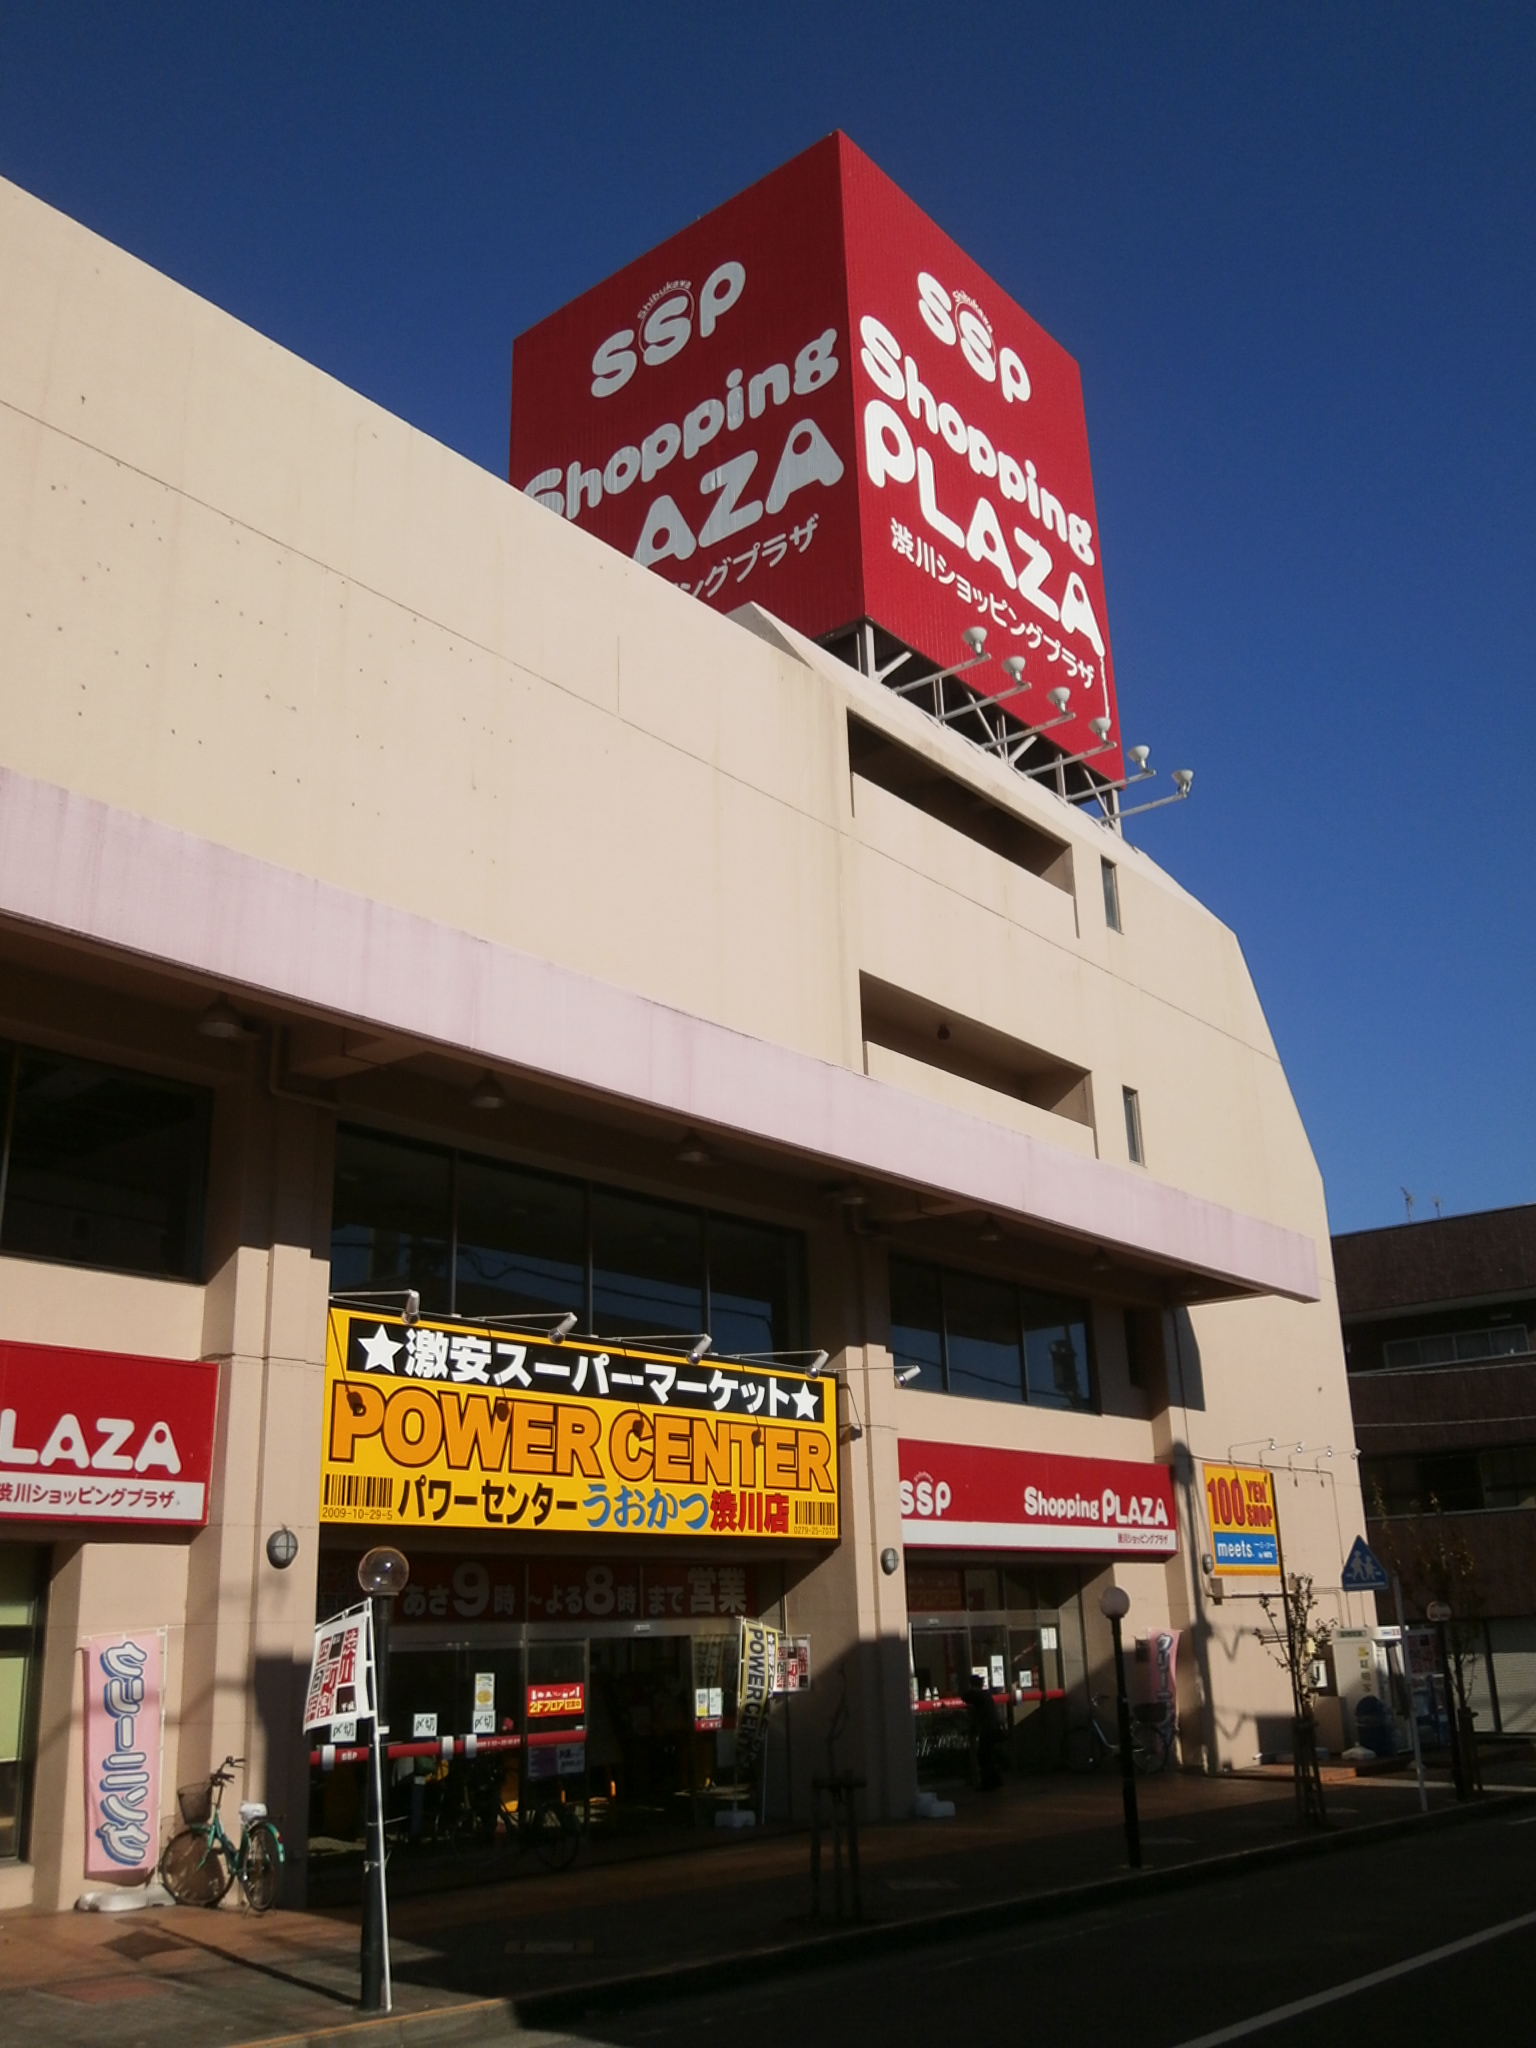 Supermarket. Power center fish and Shibukawa store up to (super) 407m